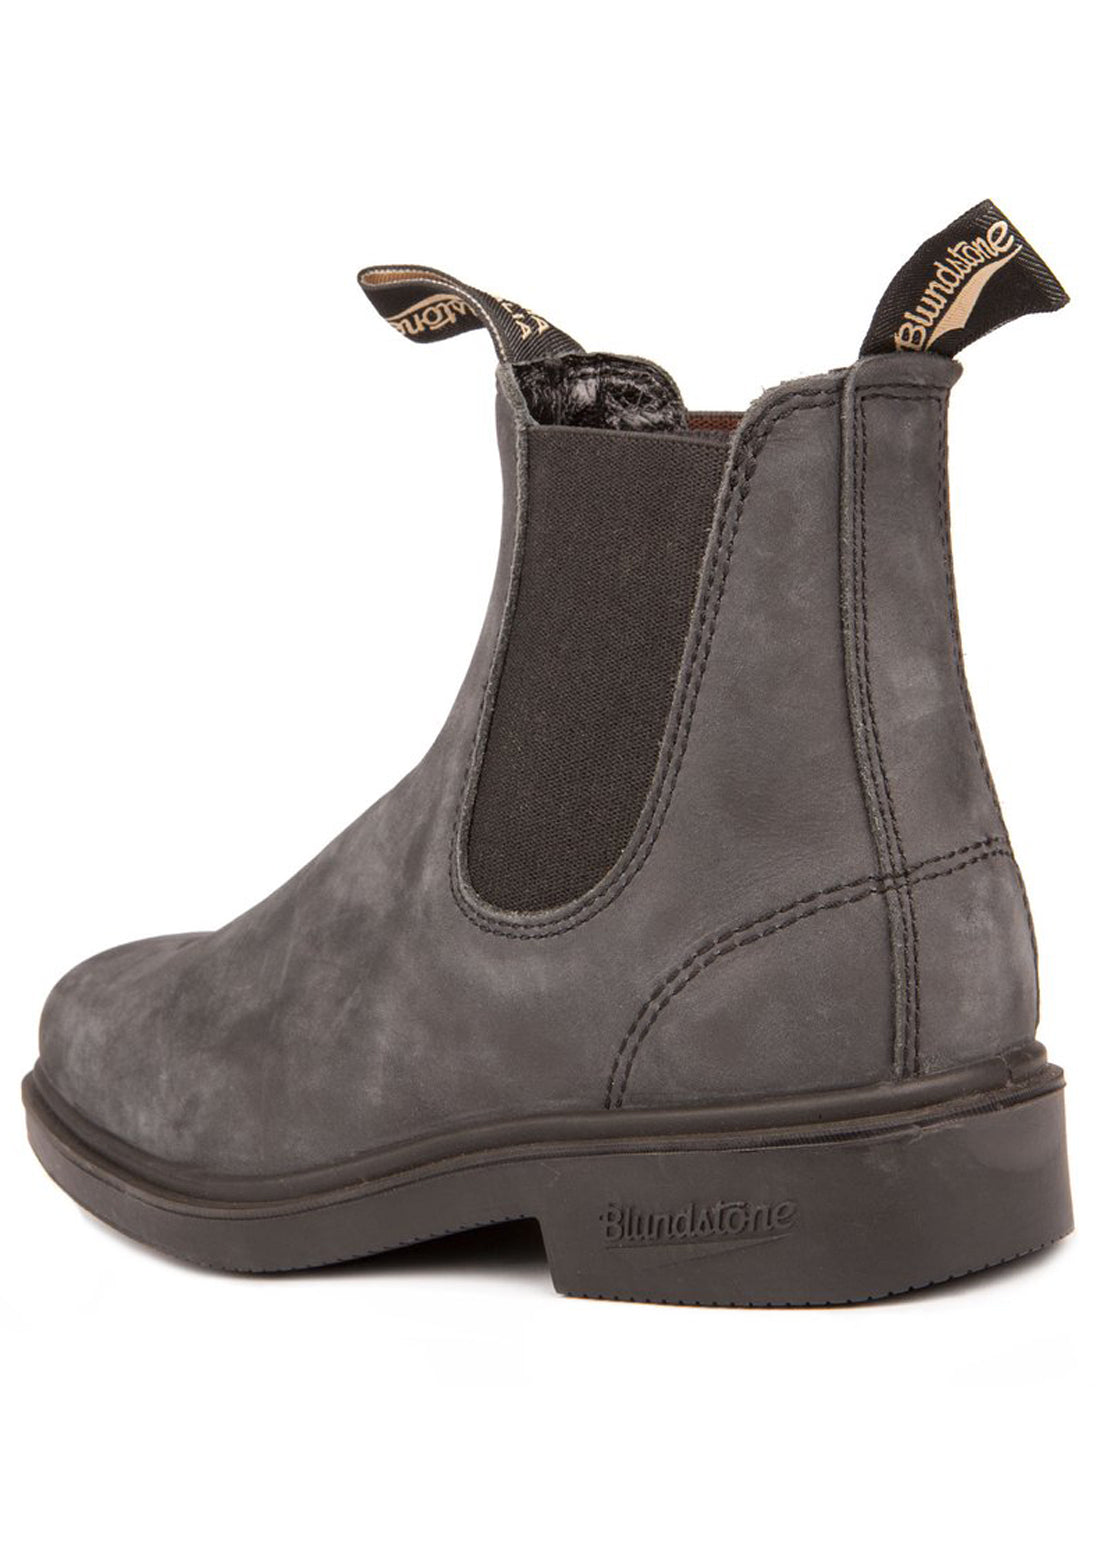 Blundstone 1308 Chisel Toe Boots (1308) Rustic Black